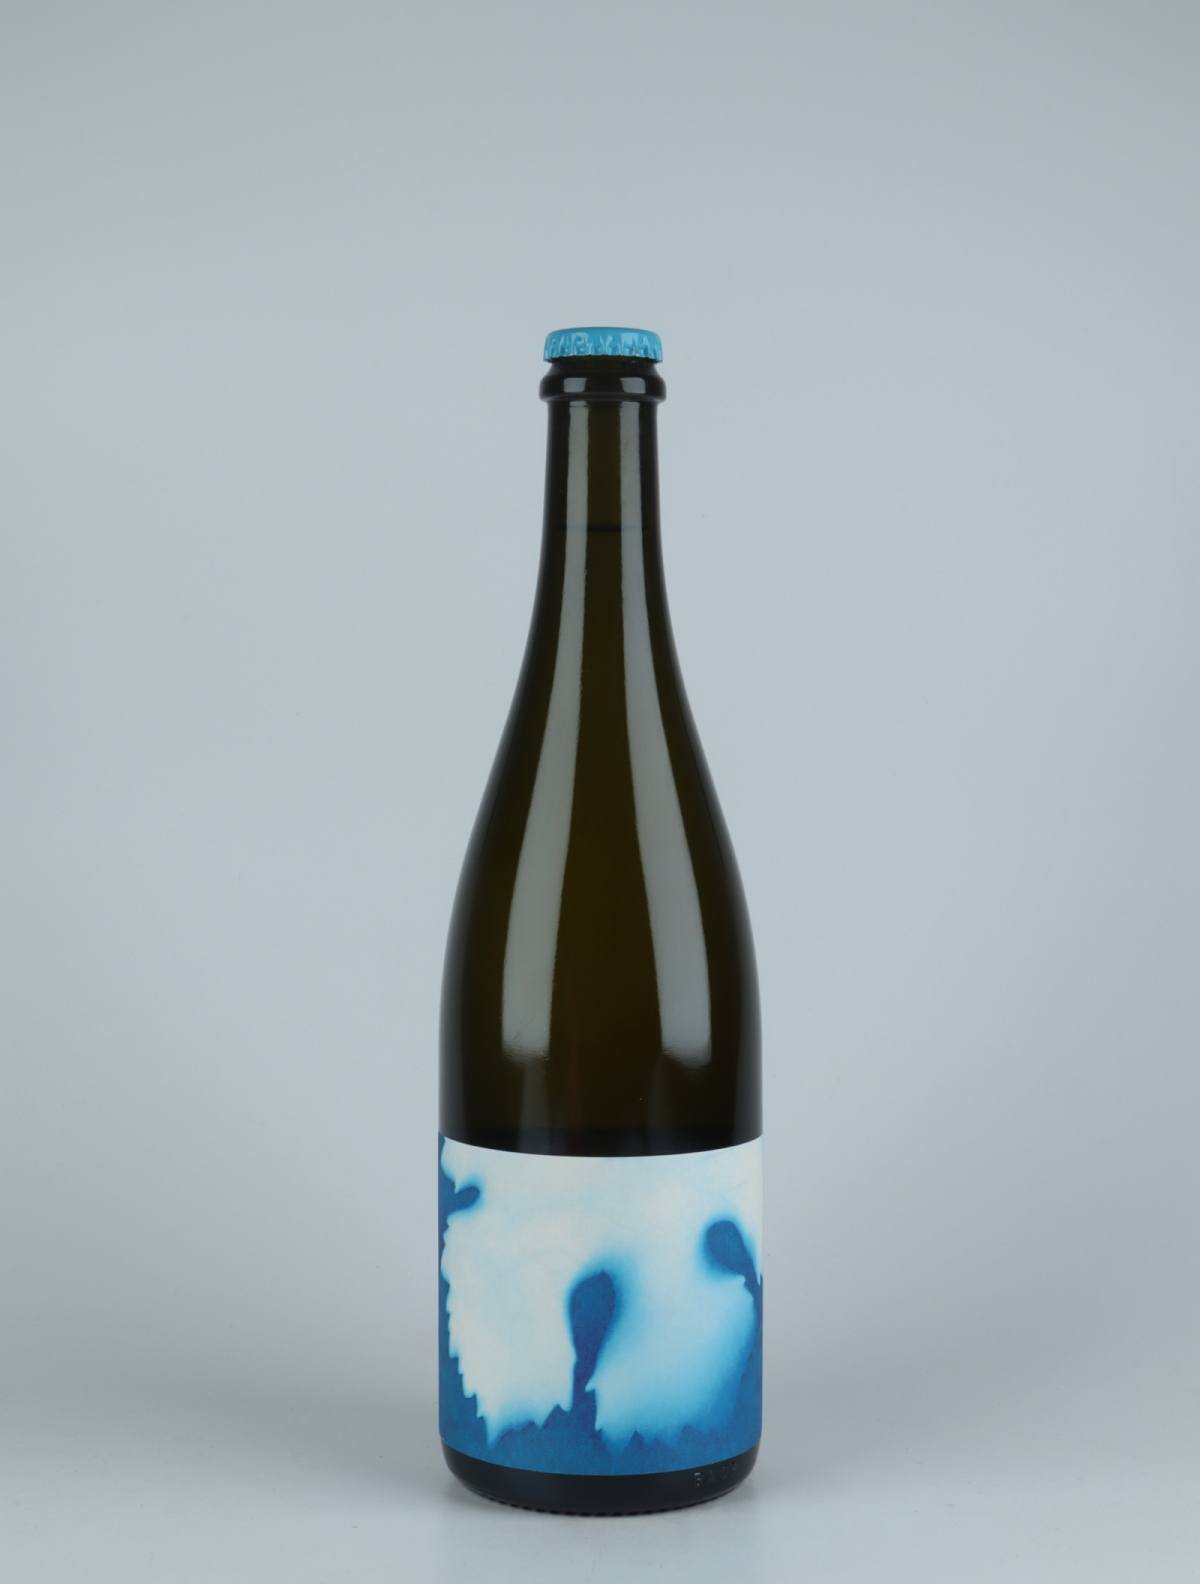 A bottle 2019 Les Doyennes White wine from Thomas Puéchavy, Loire in France